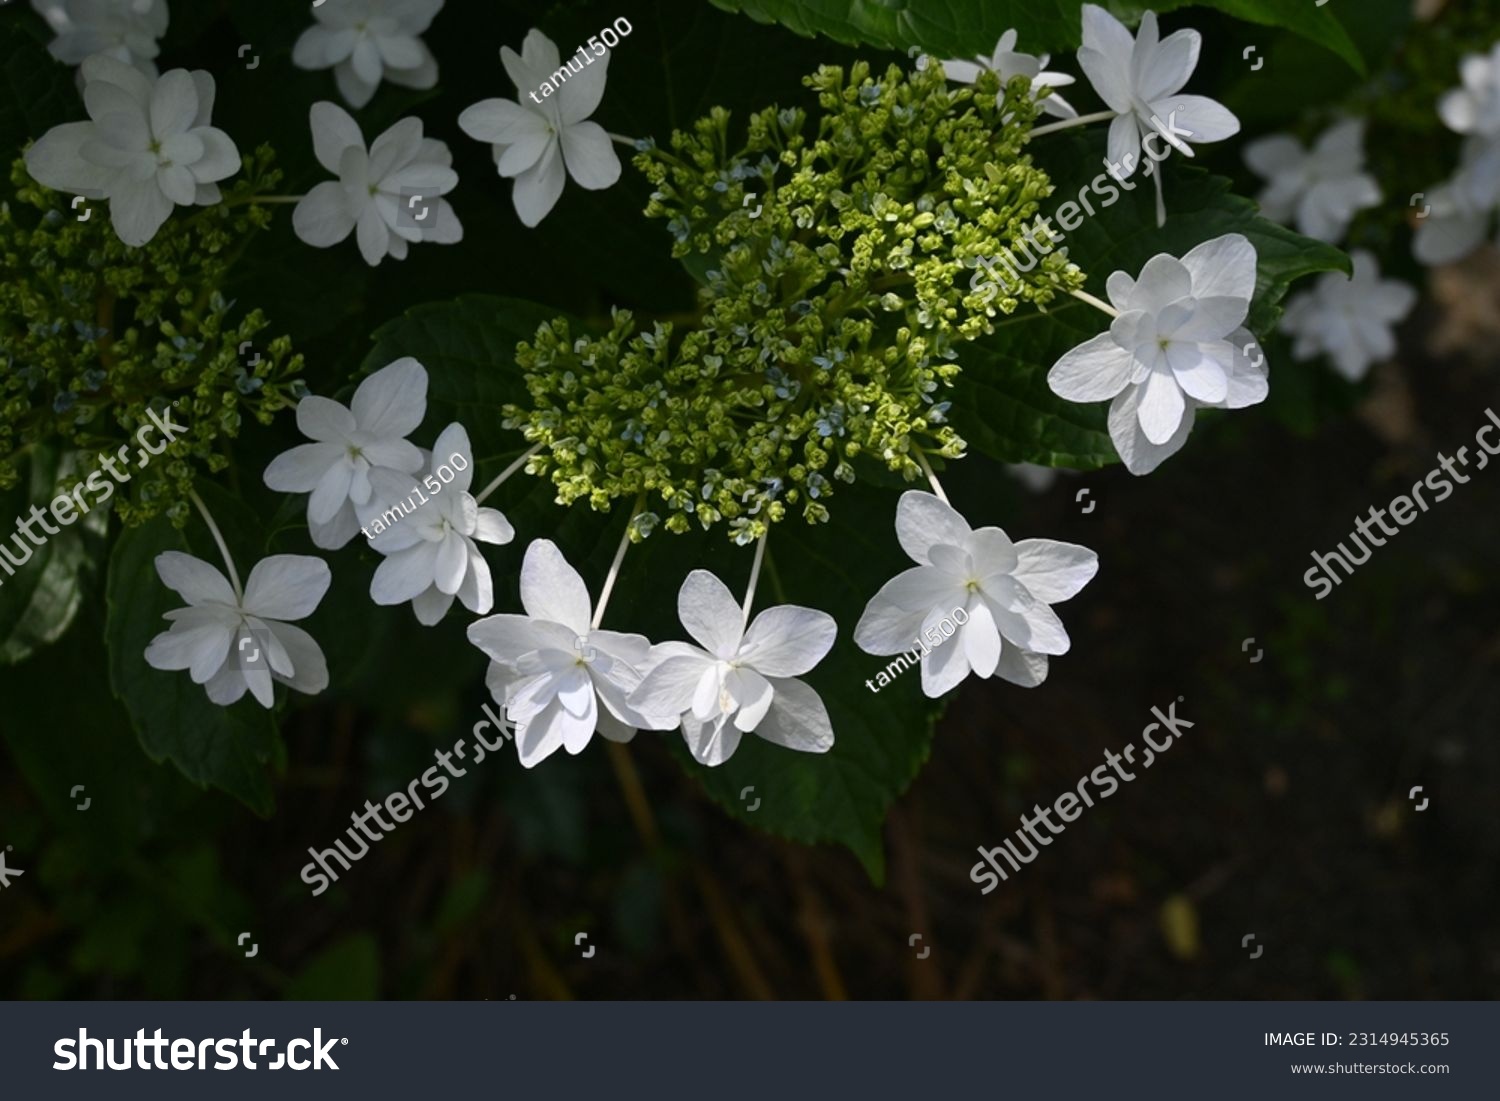 Hydrangea flowers. Seasonal background material. Hydrangea flowers are a seasonal tradition in Japan during the rainy season. #2314945365